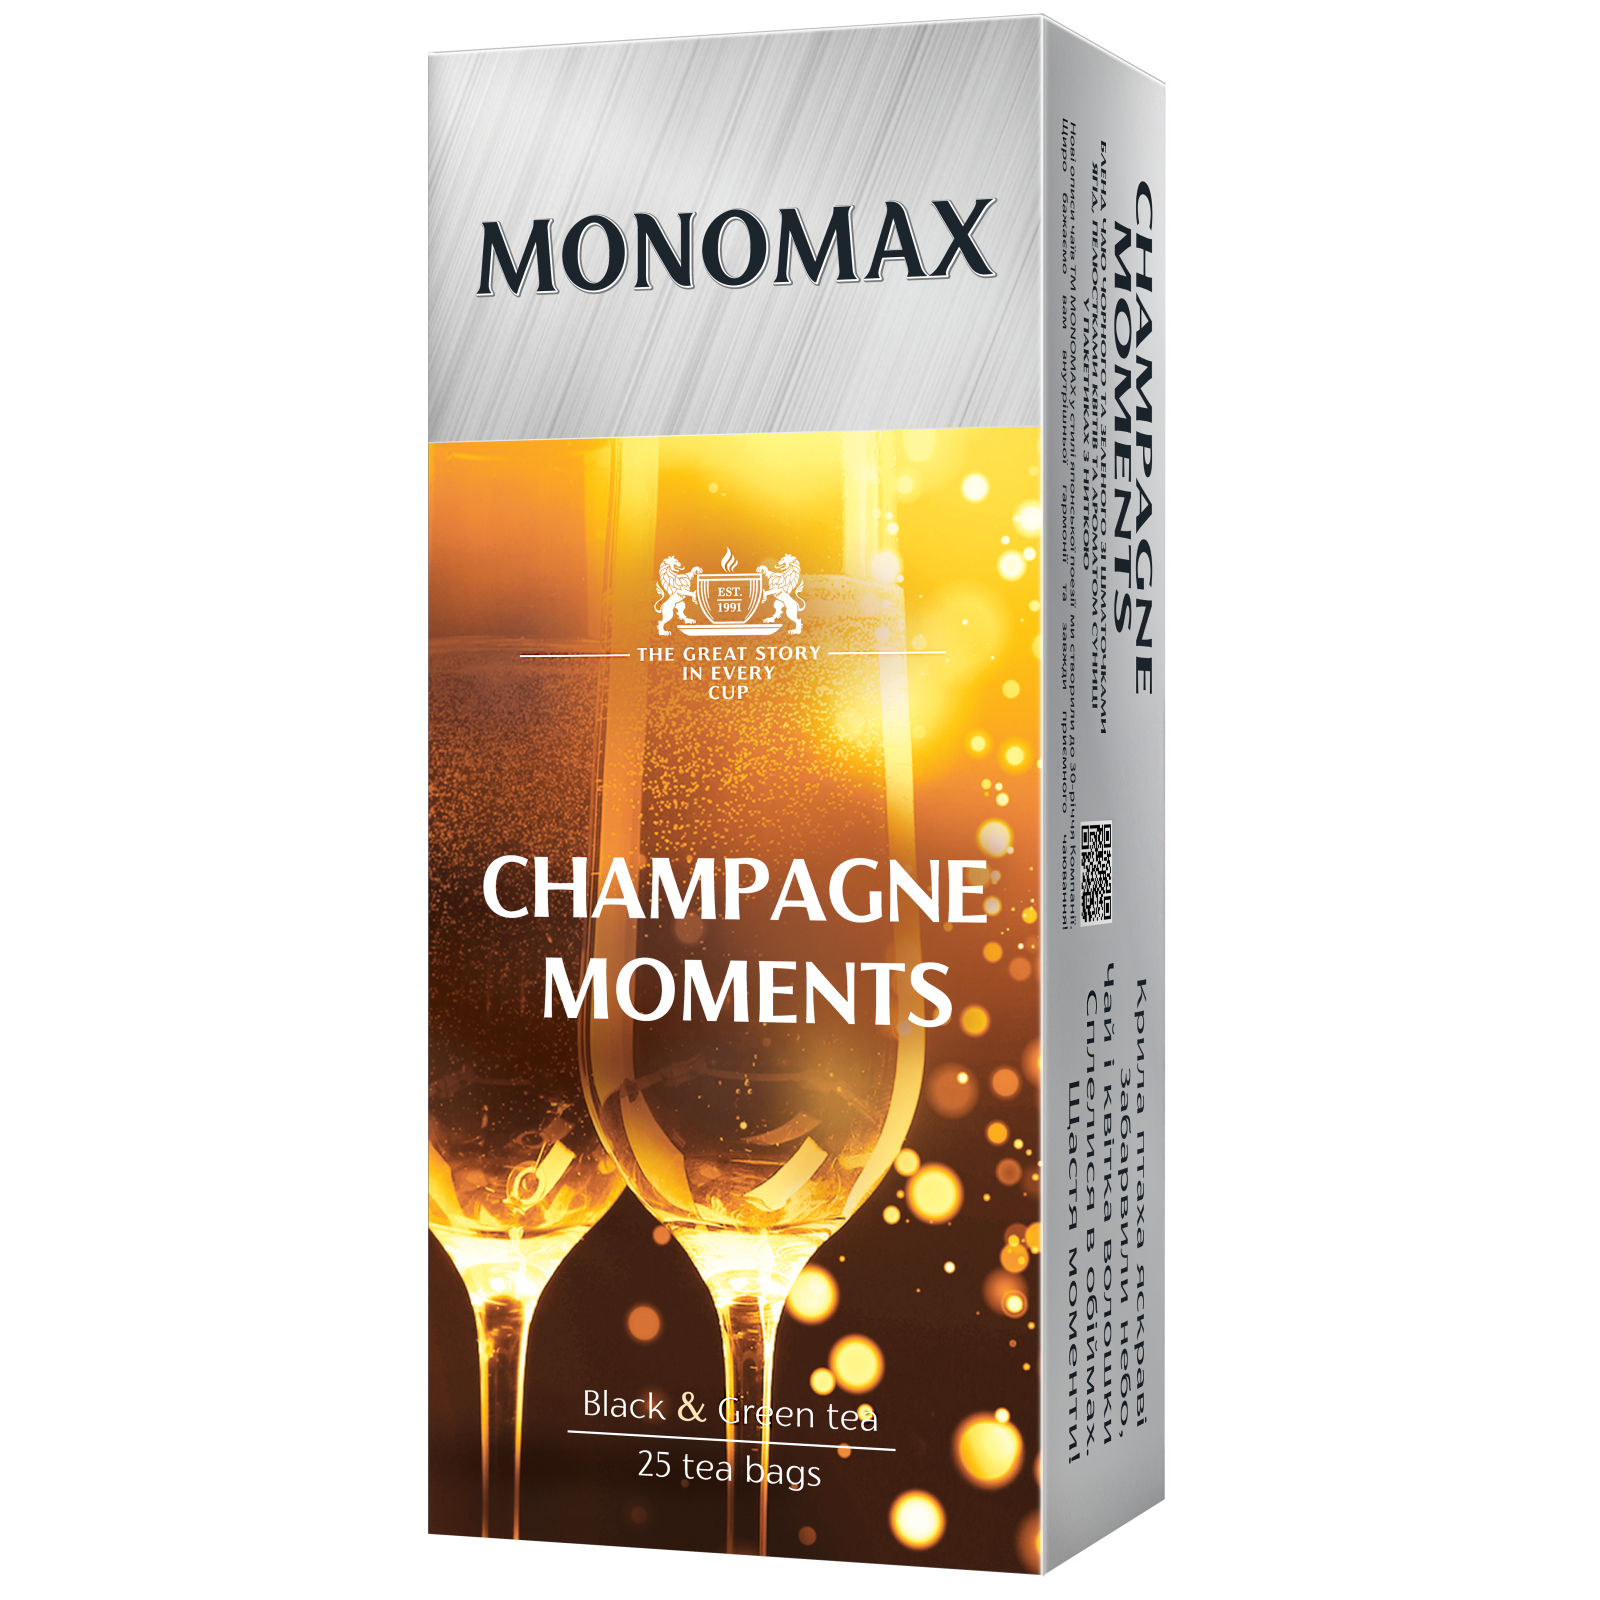 Чай Мономах Champagne Moment 25х1.5 г (mn.70812)